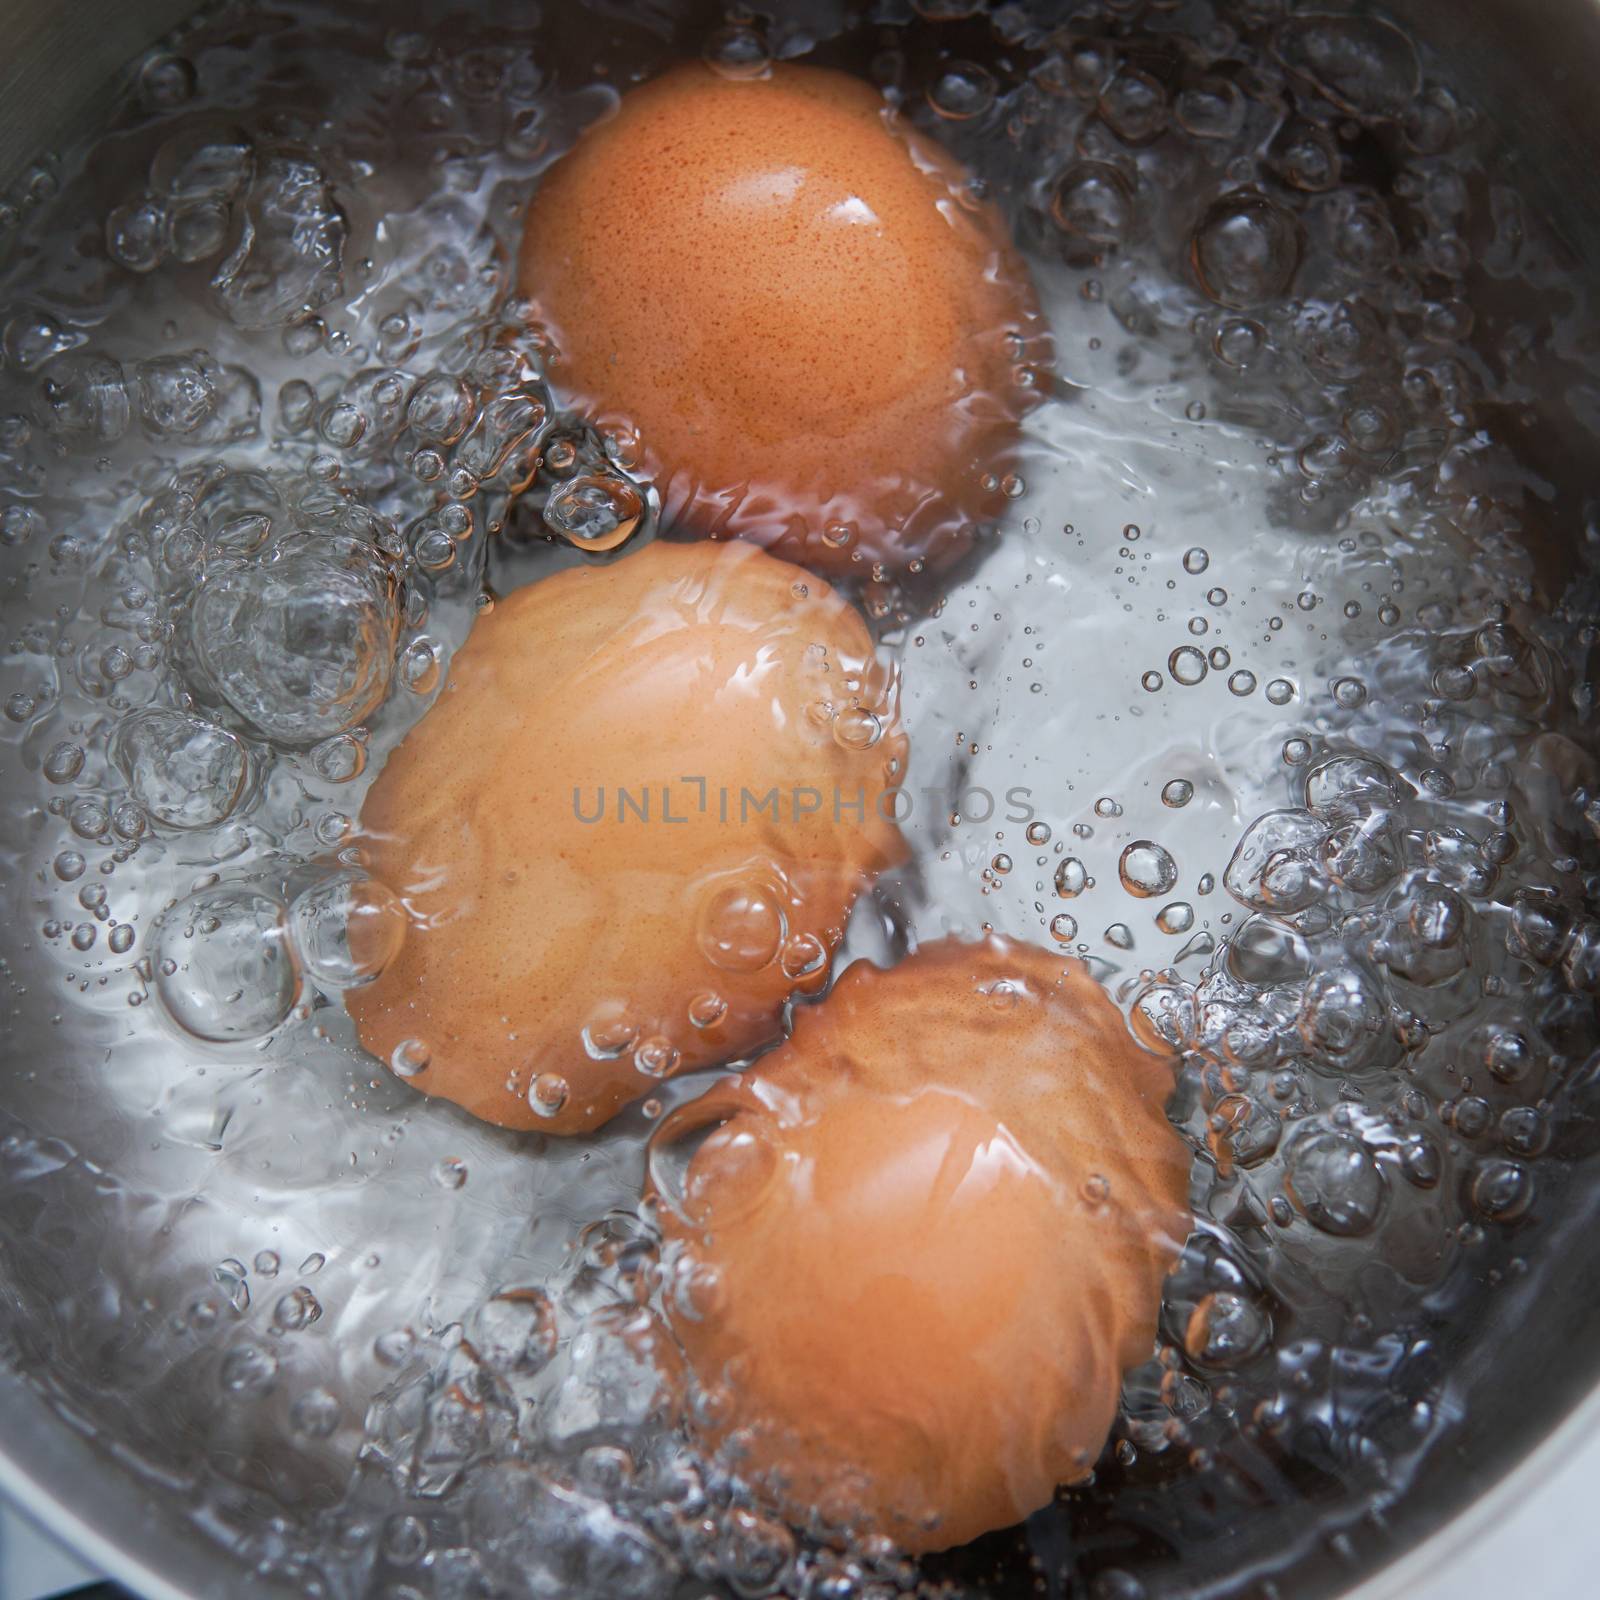 eggs in boiling water by antpkr